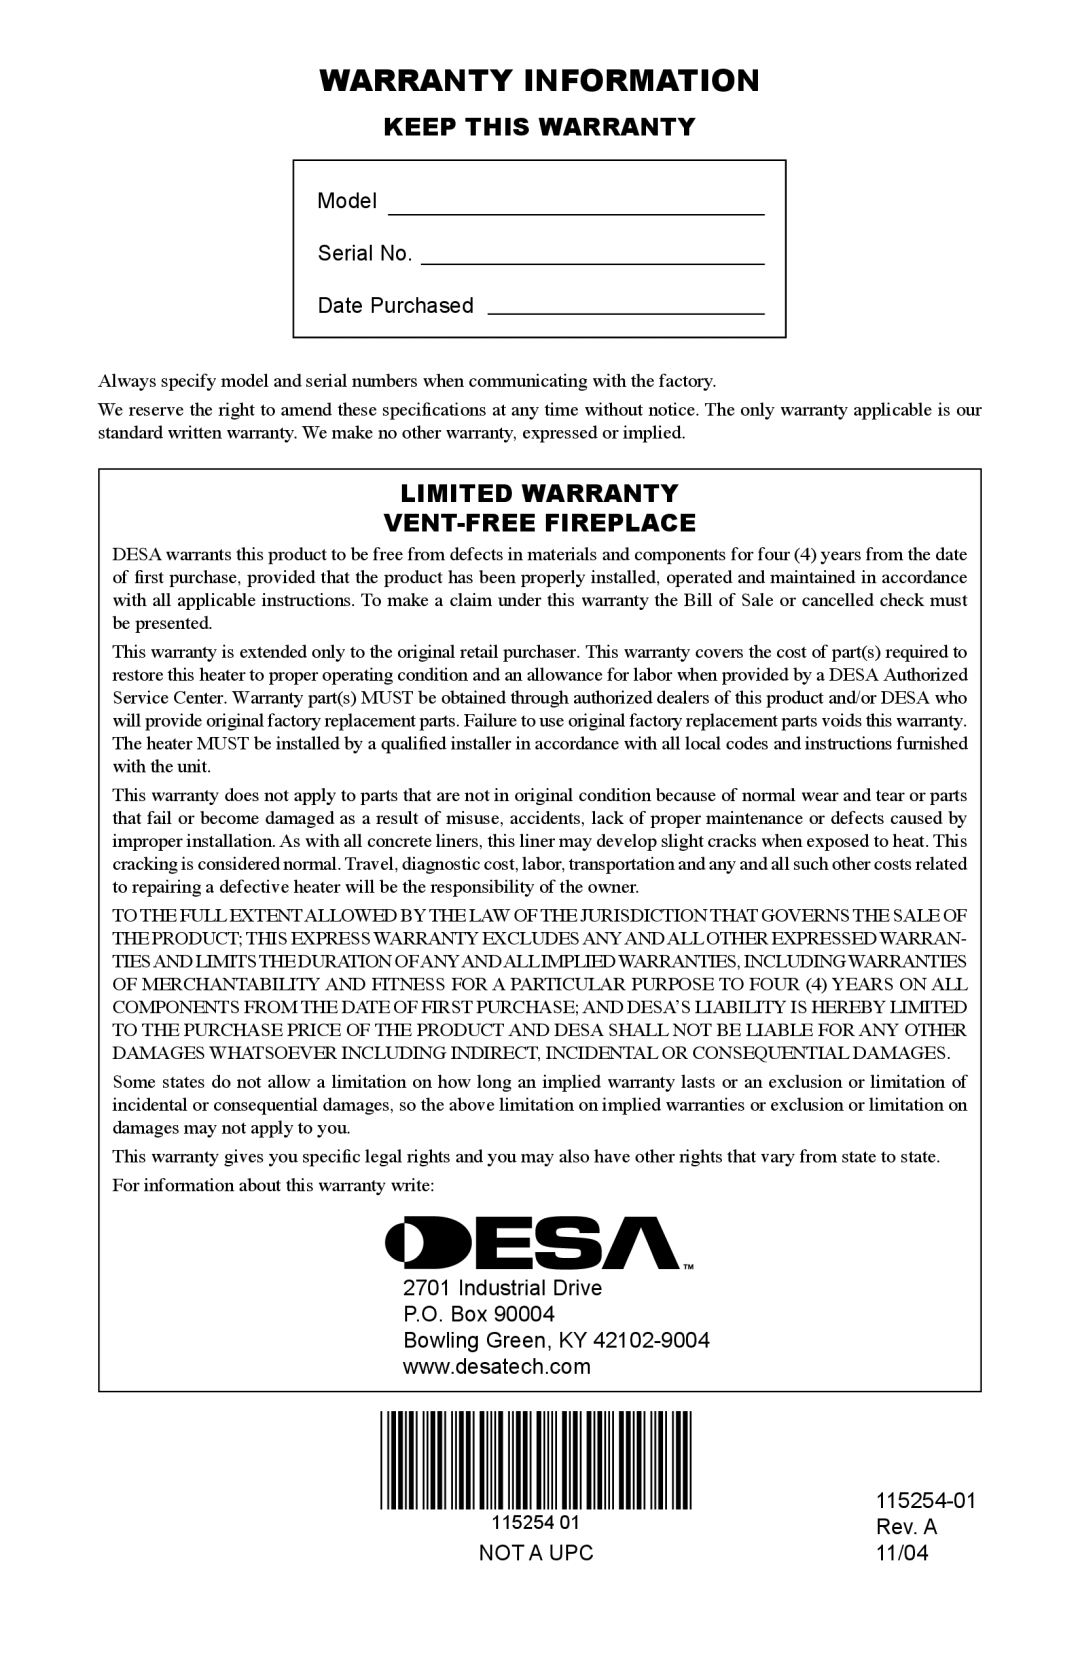 Desa LEN) (V)L32(HP, LZPR), LHP) (V)L36(EP Warranty Information, Keep This Warranty, Limited Warranty Vent-Freefireplace 